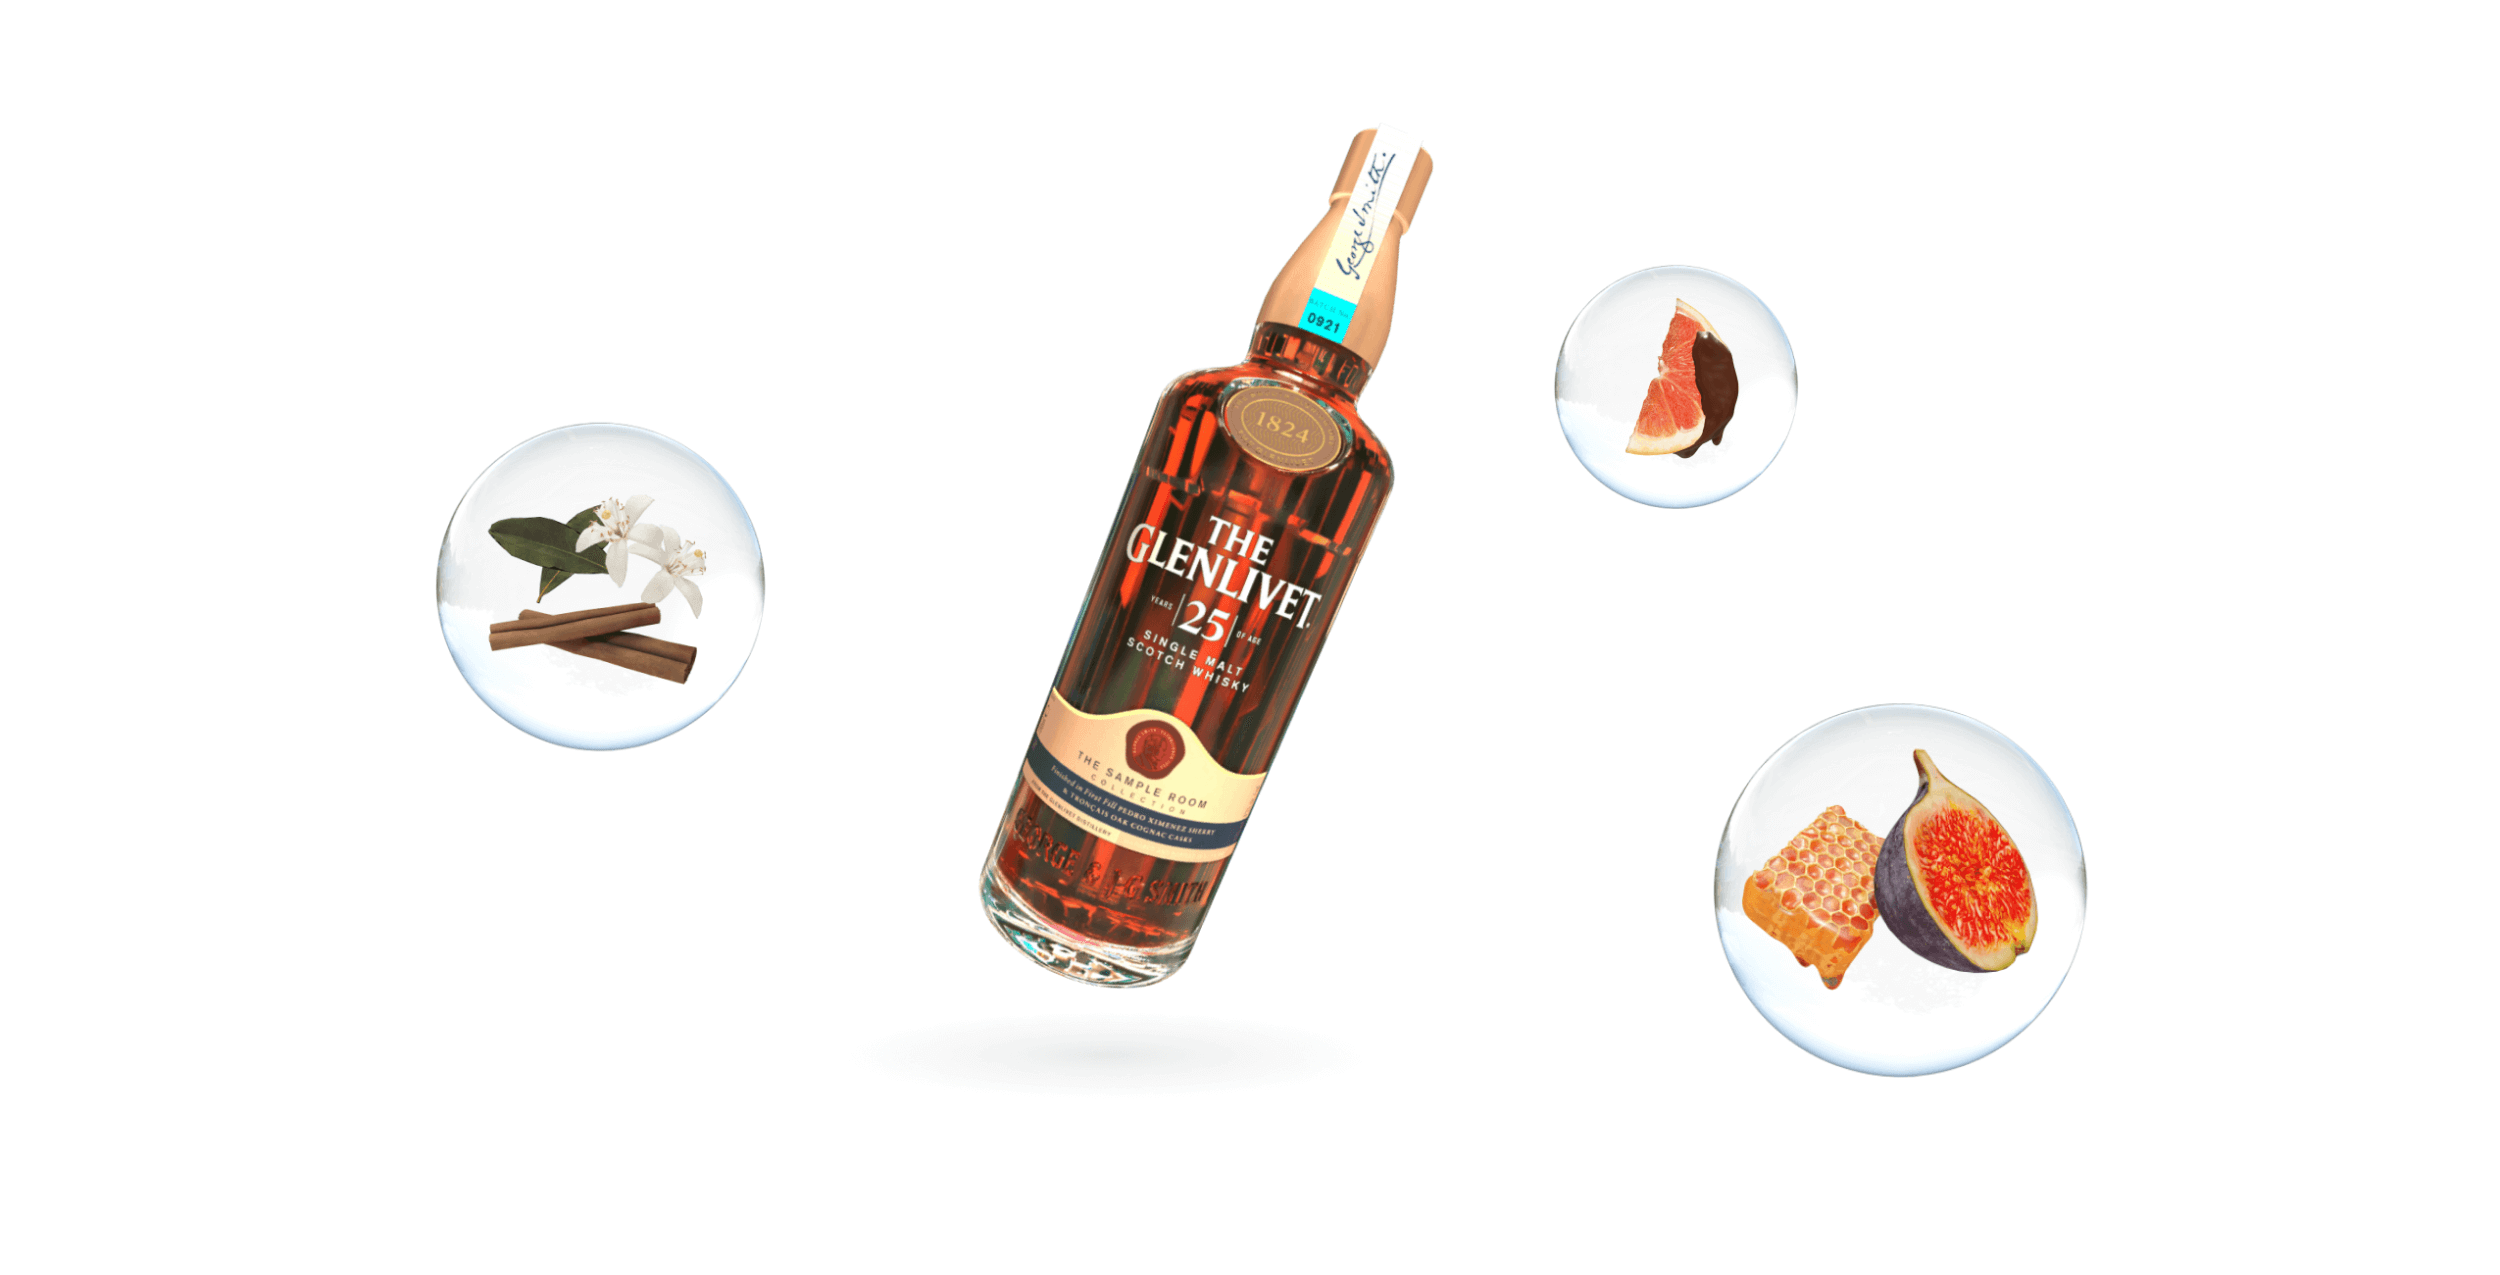 The Glenlivet - Hero Image - AR - Experience - Tasting Room - Flavors - Notes - Whisky Bottle - Flavor Profile